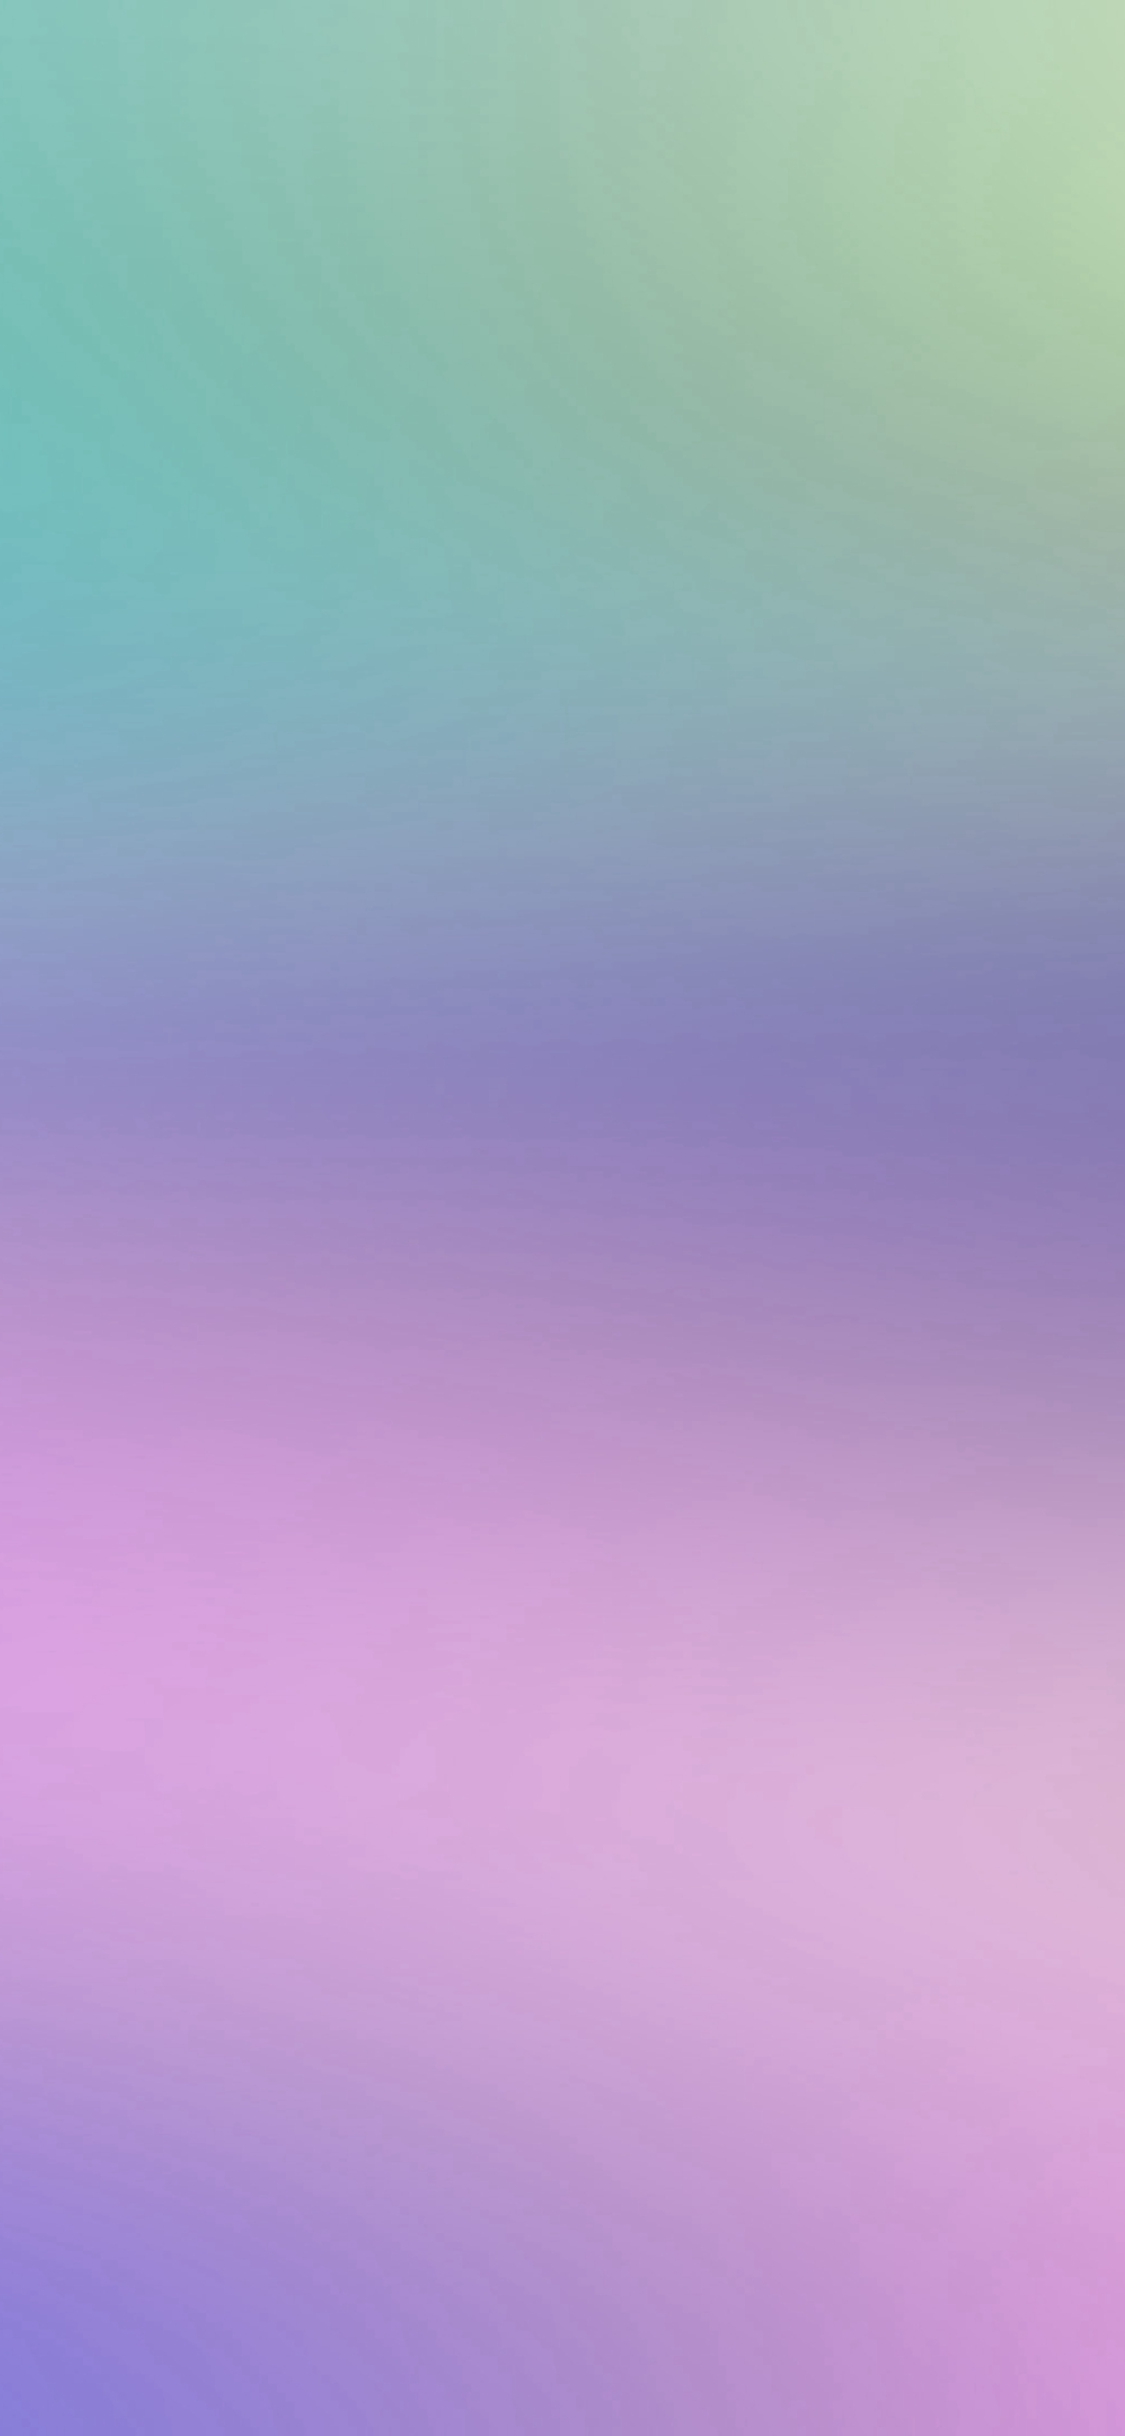 Blue And Purple Blur Gradation Background iPhone wallpaper 